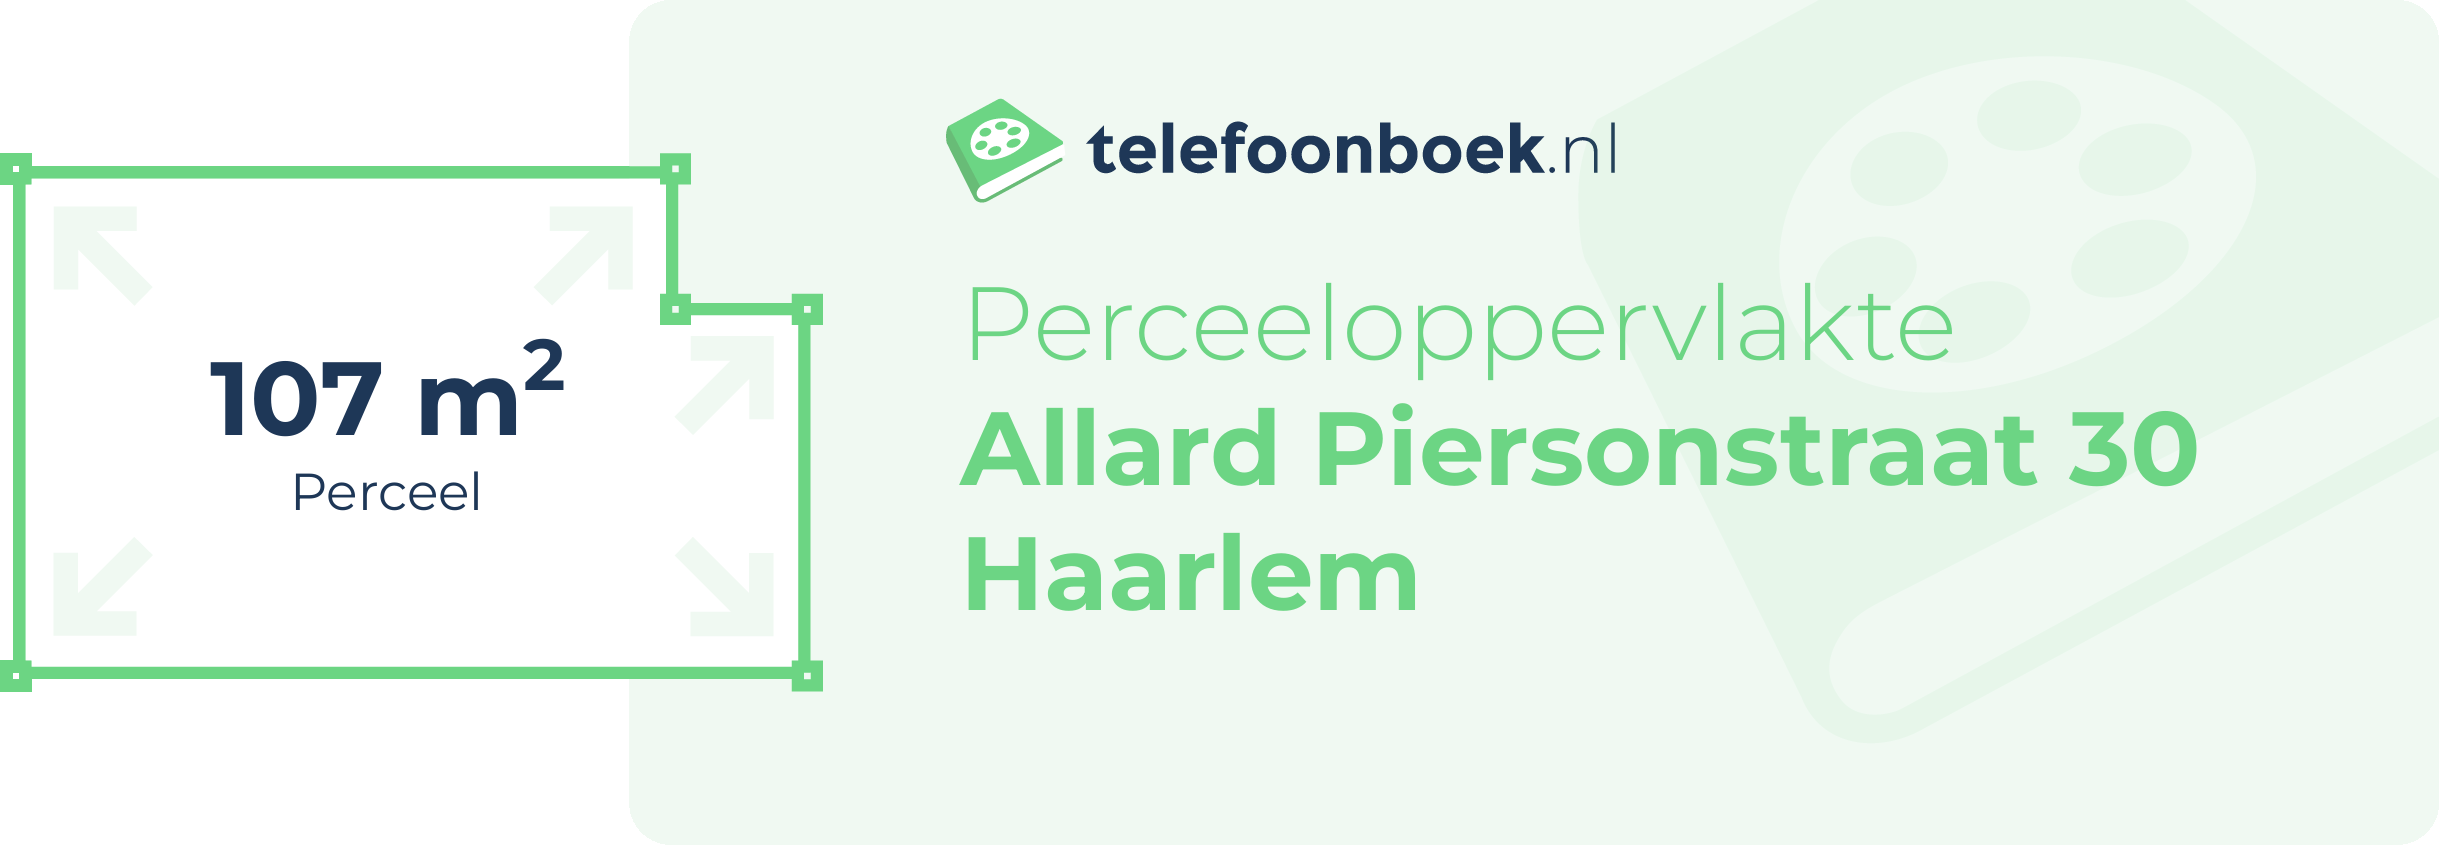 Perceeloppervlakte Allard Piersonstraat 30 Haarlem